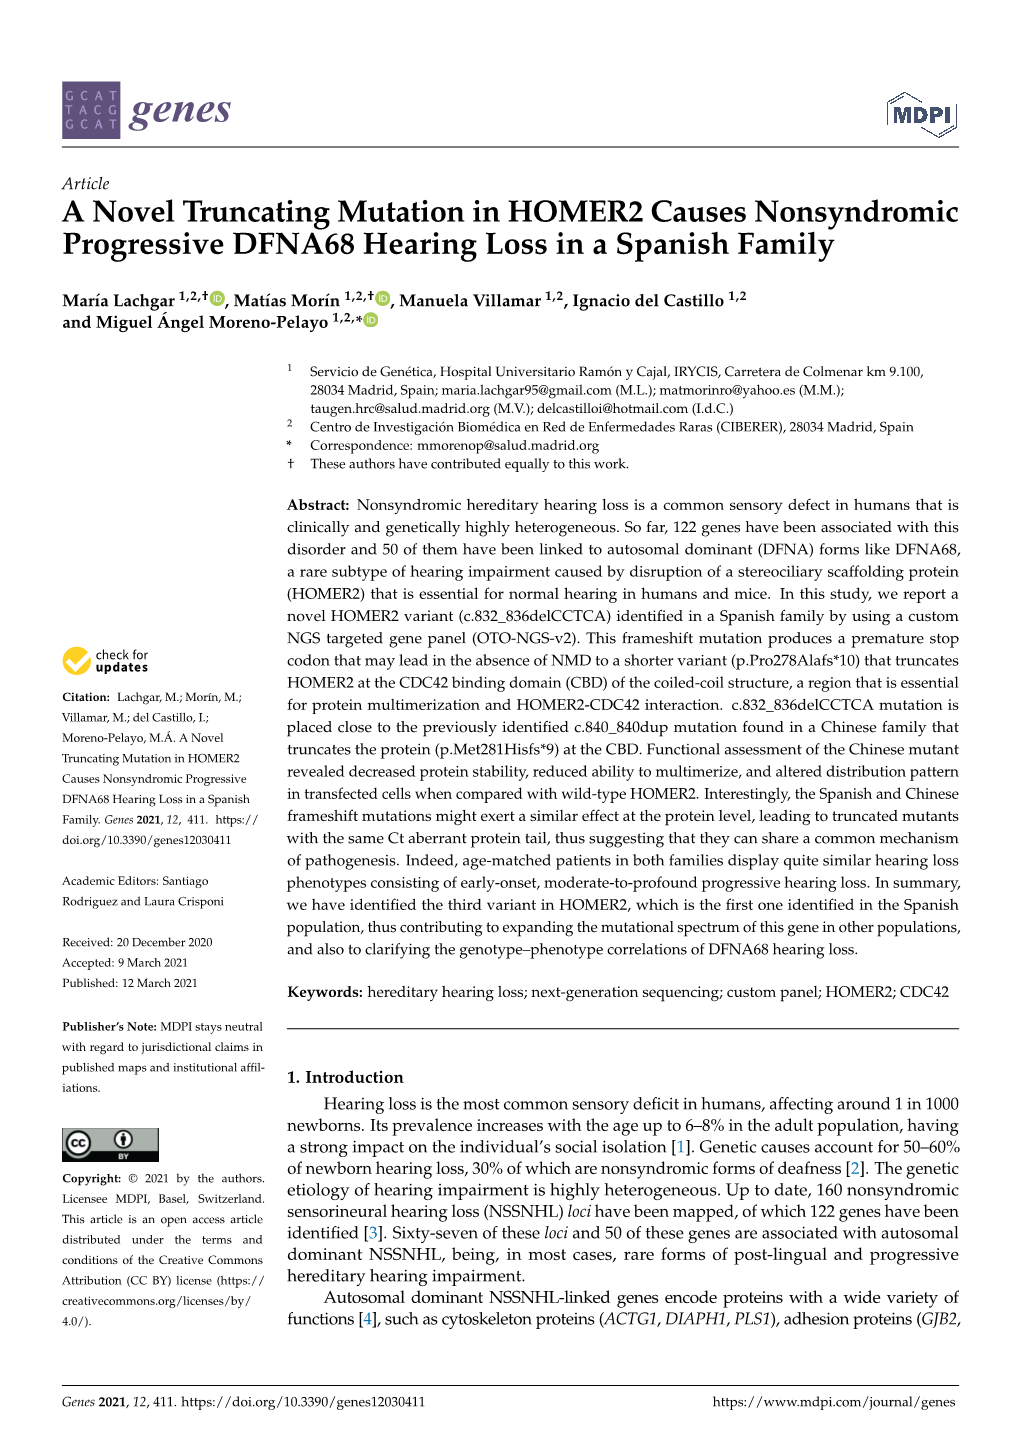 A Novel Truncating Mutation in HOMER2 Causes Nonsyndromic Progressive DFNA68 Hearing Loss in a Spanish Family